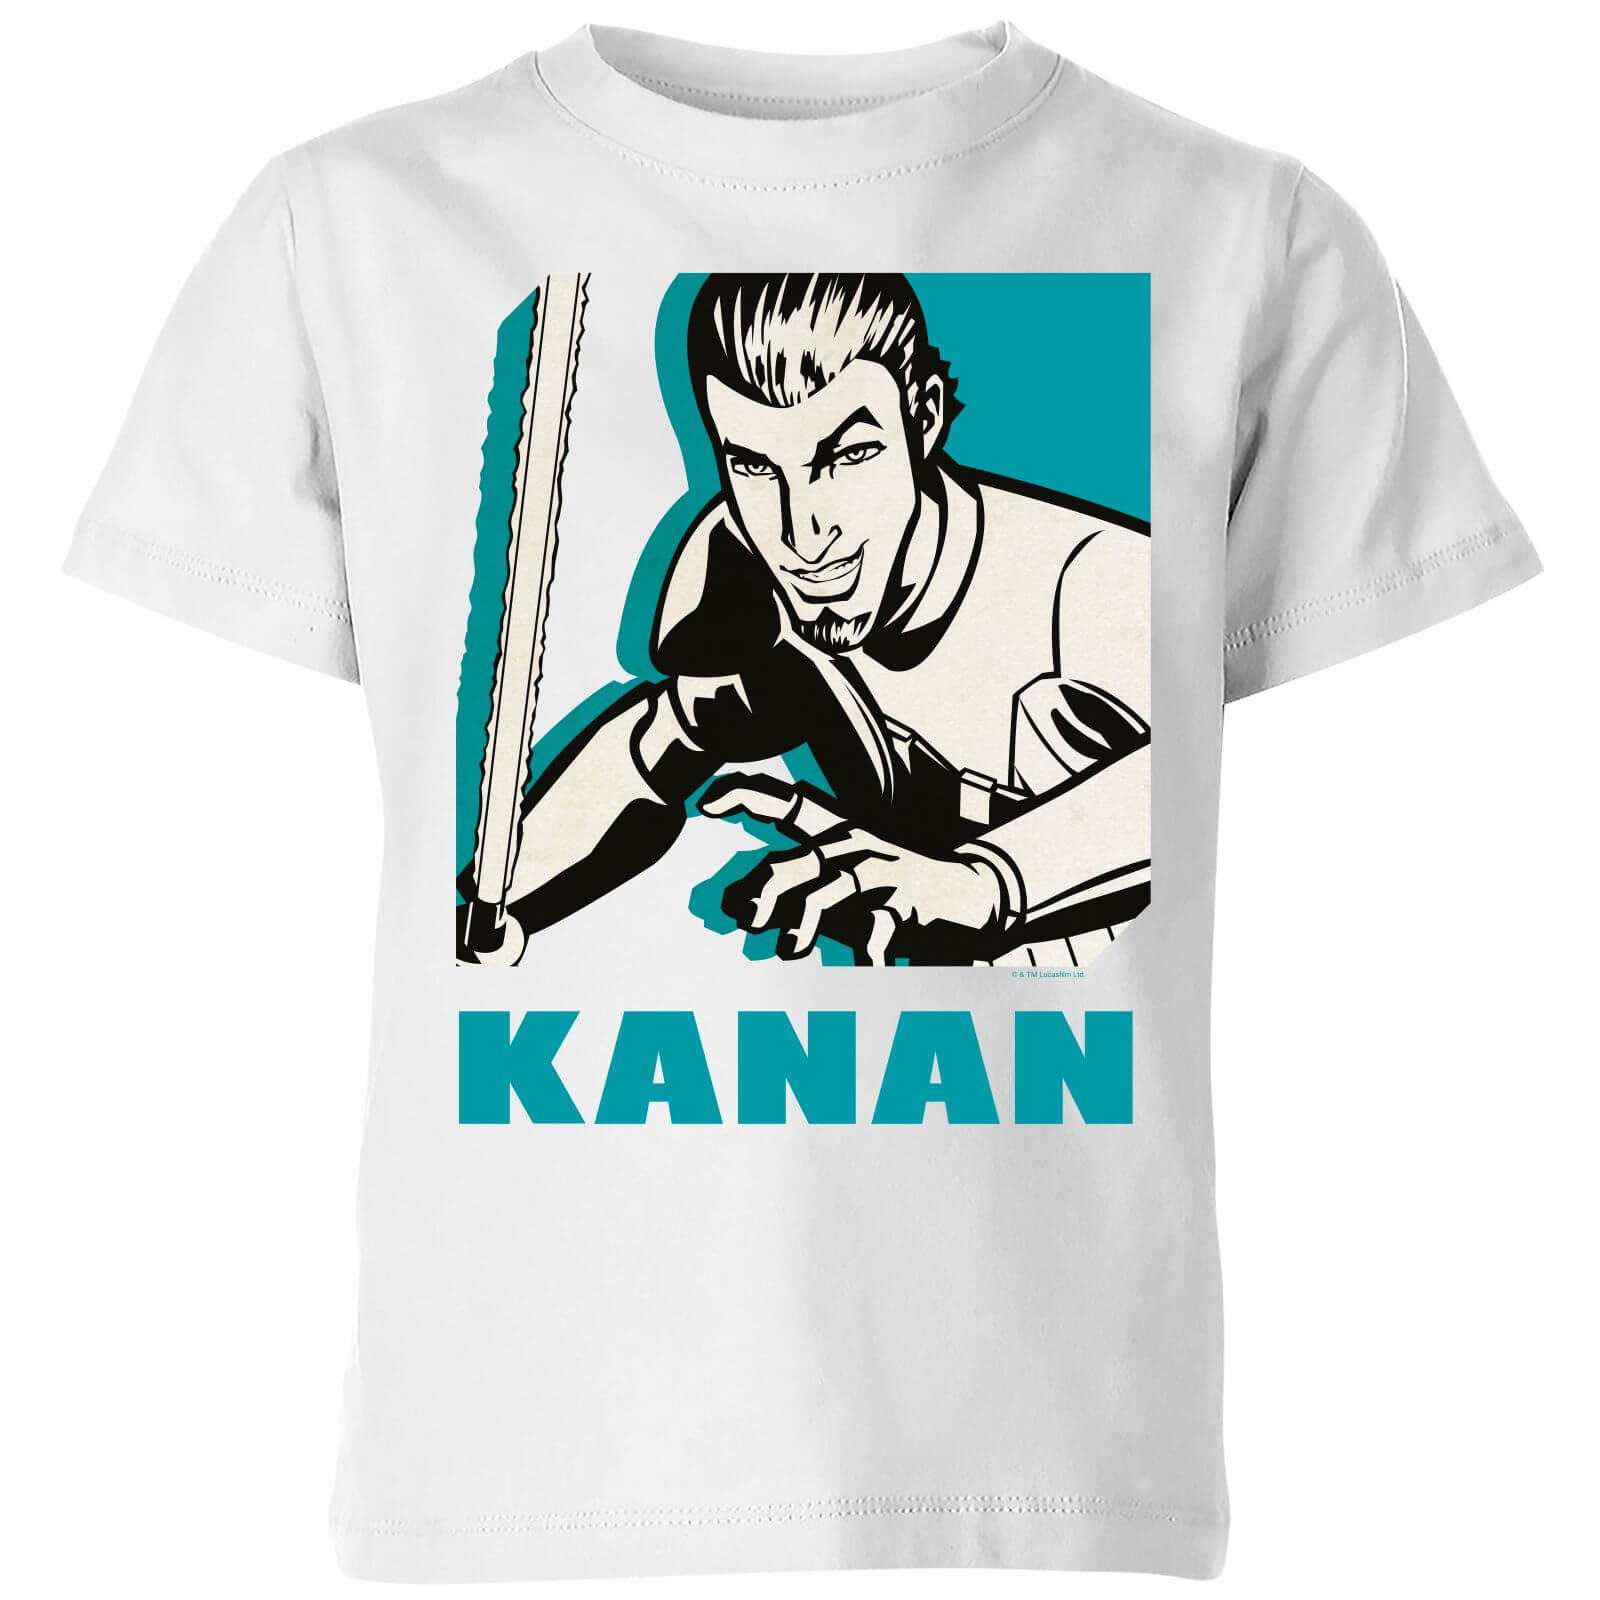 Star Wars Rebels Kanan Kids' T-Shirt - White - 11-12 Years - White